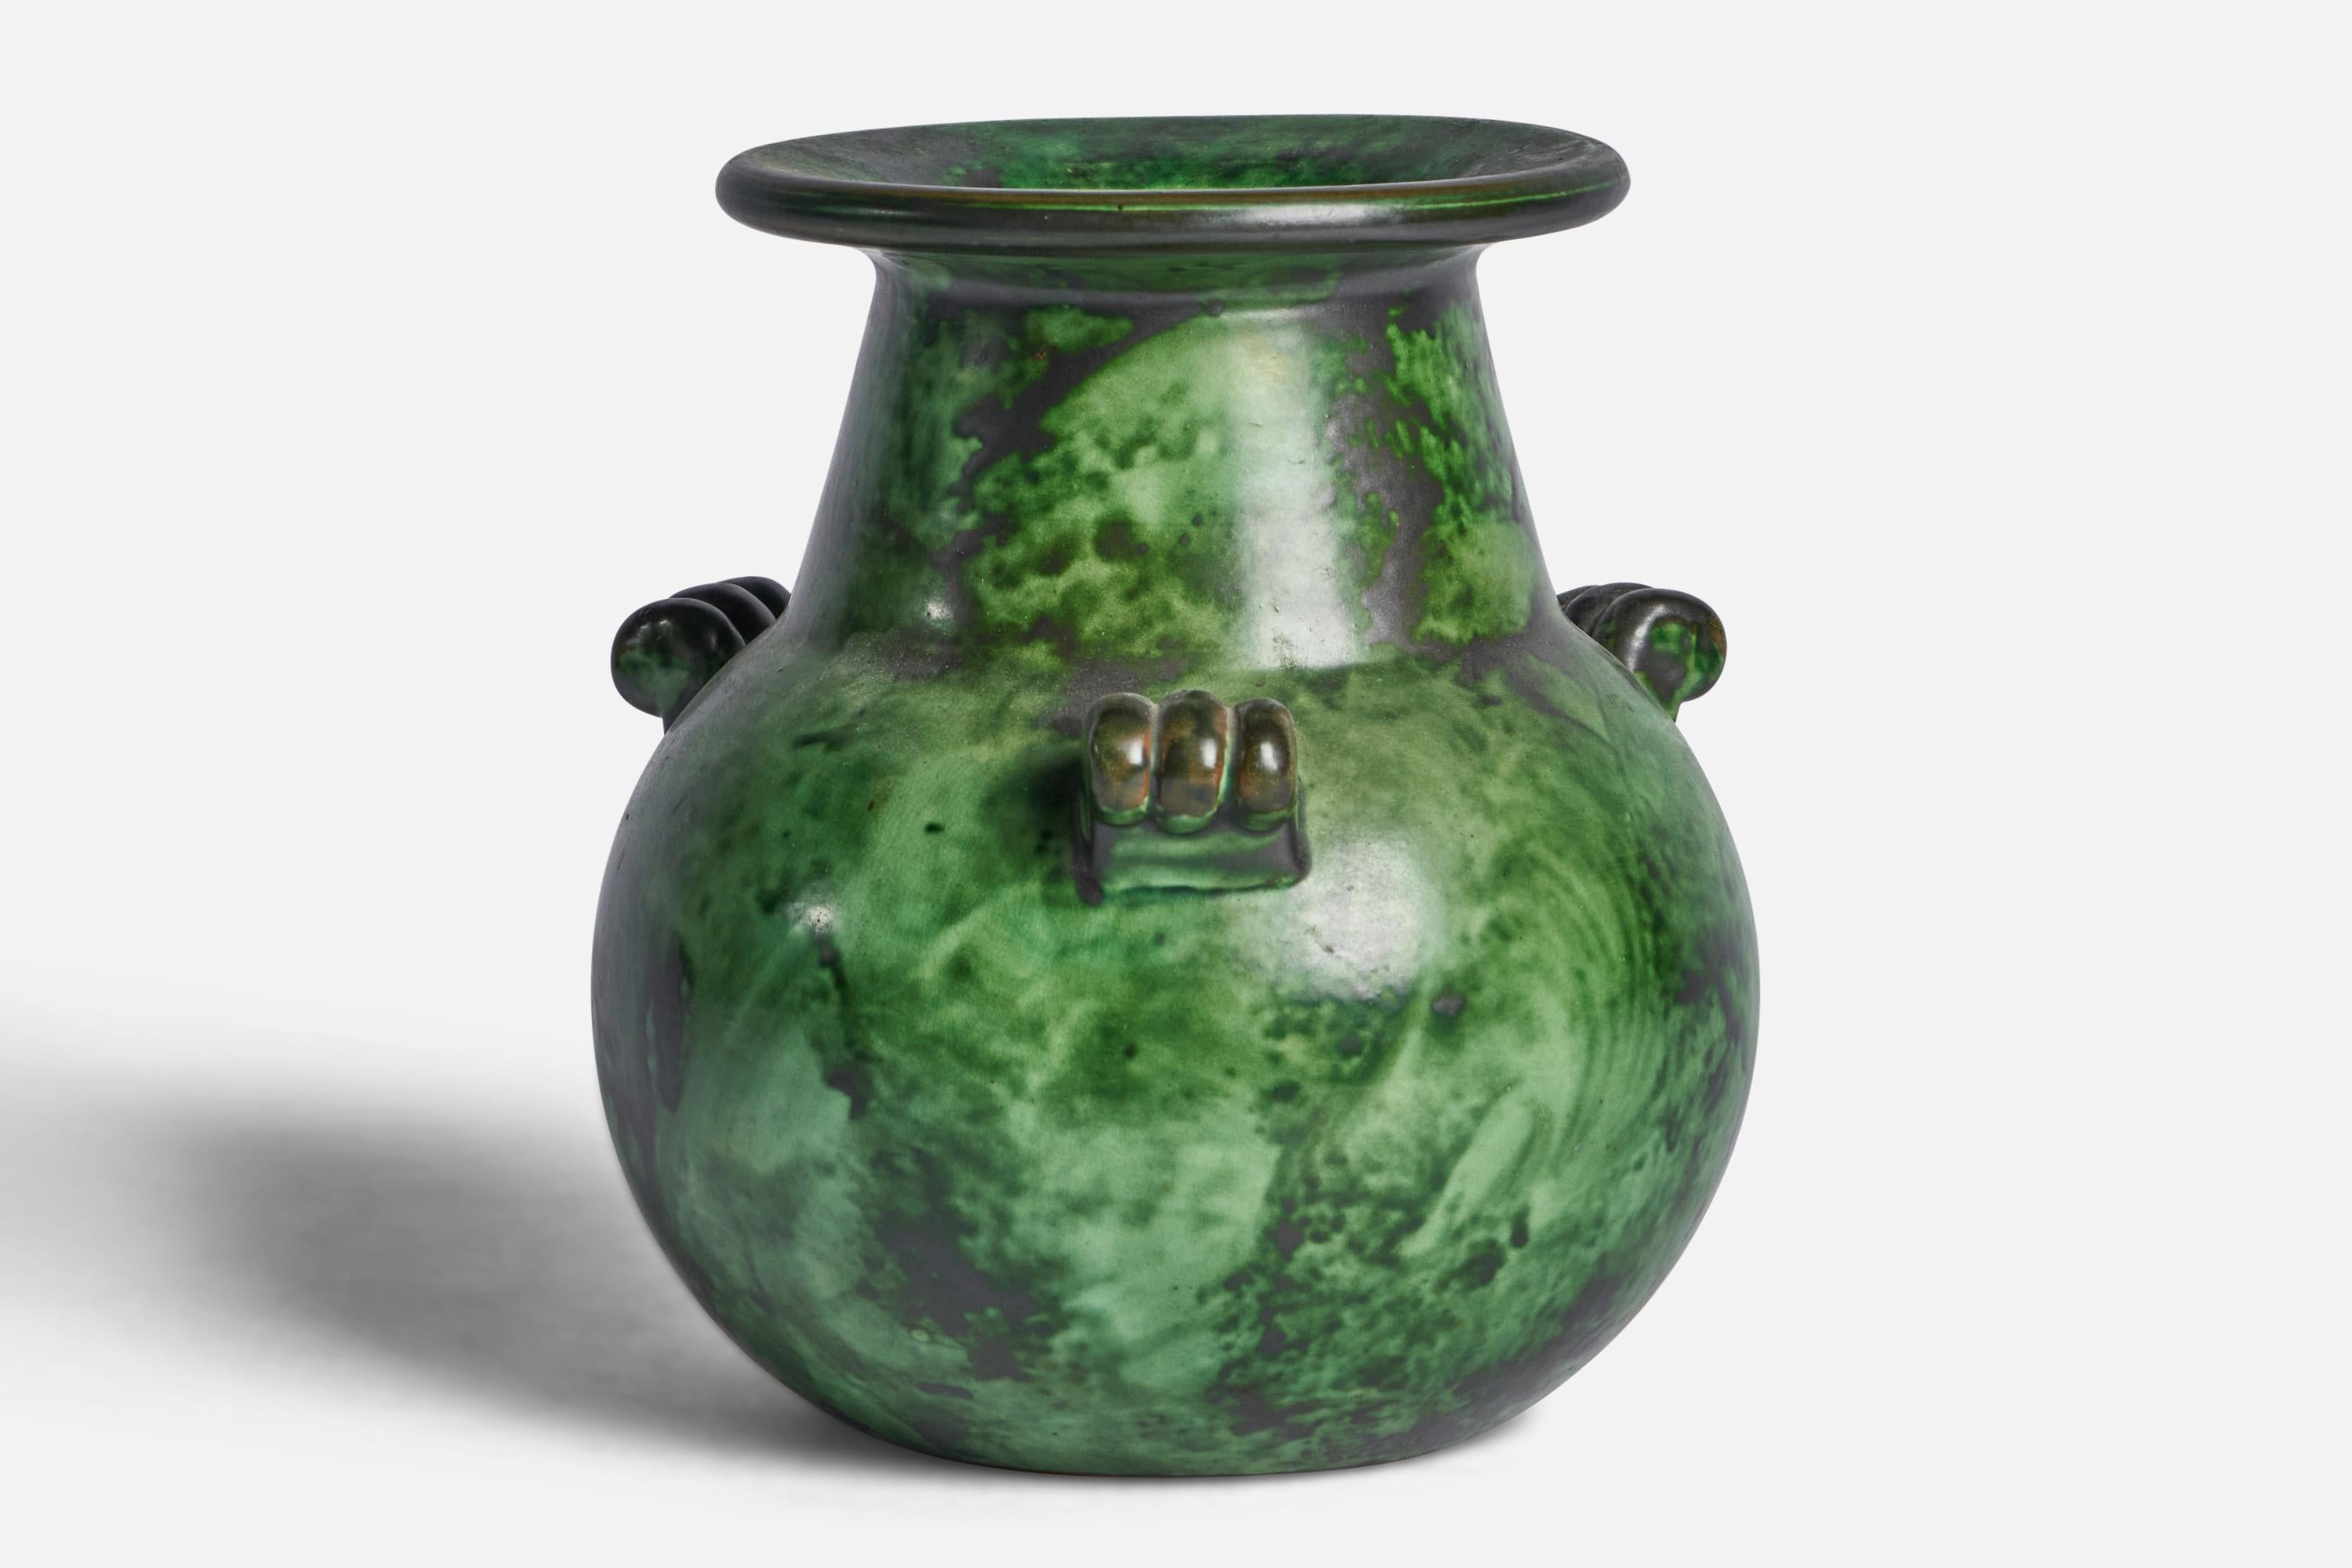 A green-glazed earthenware vase designed by Erik Mornils and produced by Nittsjö, Sweden, c. 1930s.